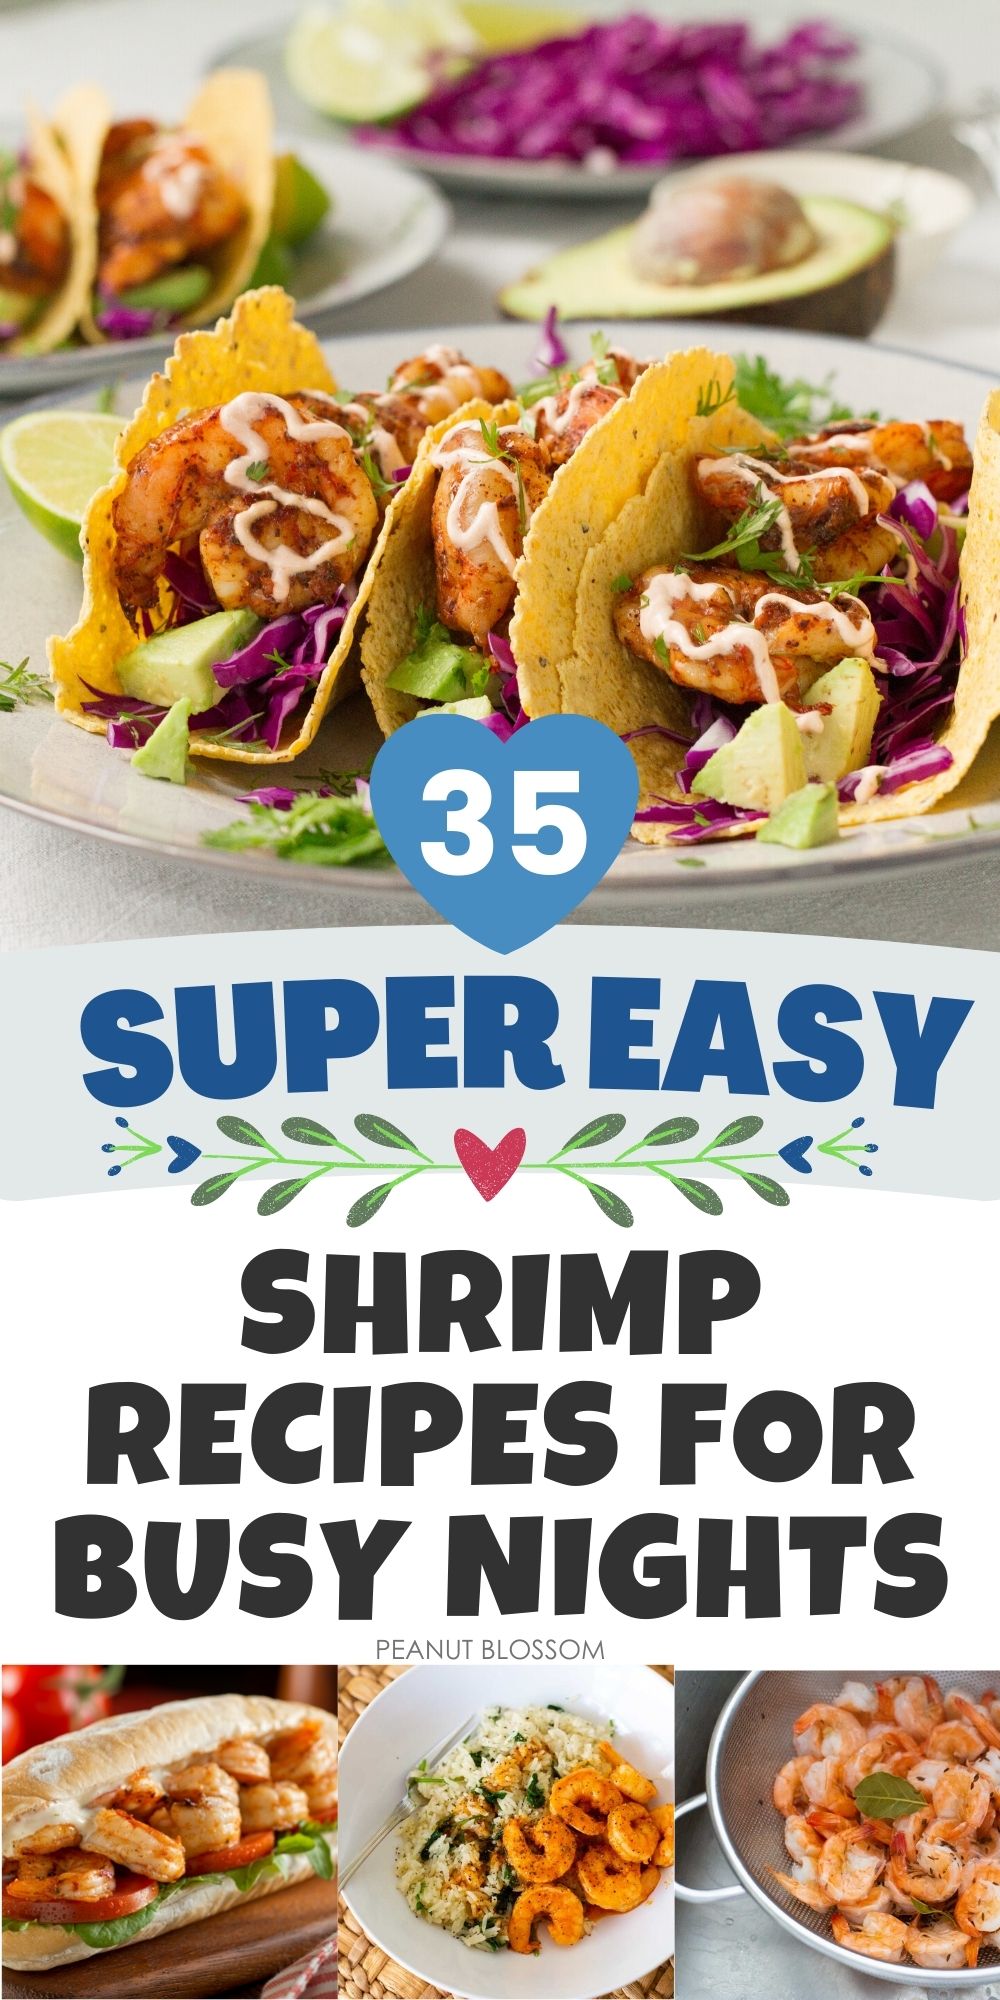 Easy shrimp dinner ideas in a photo collage include shrimp tacos, shrimp po'boy sandwich, and a shrimp rice bowl.